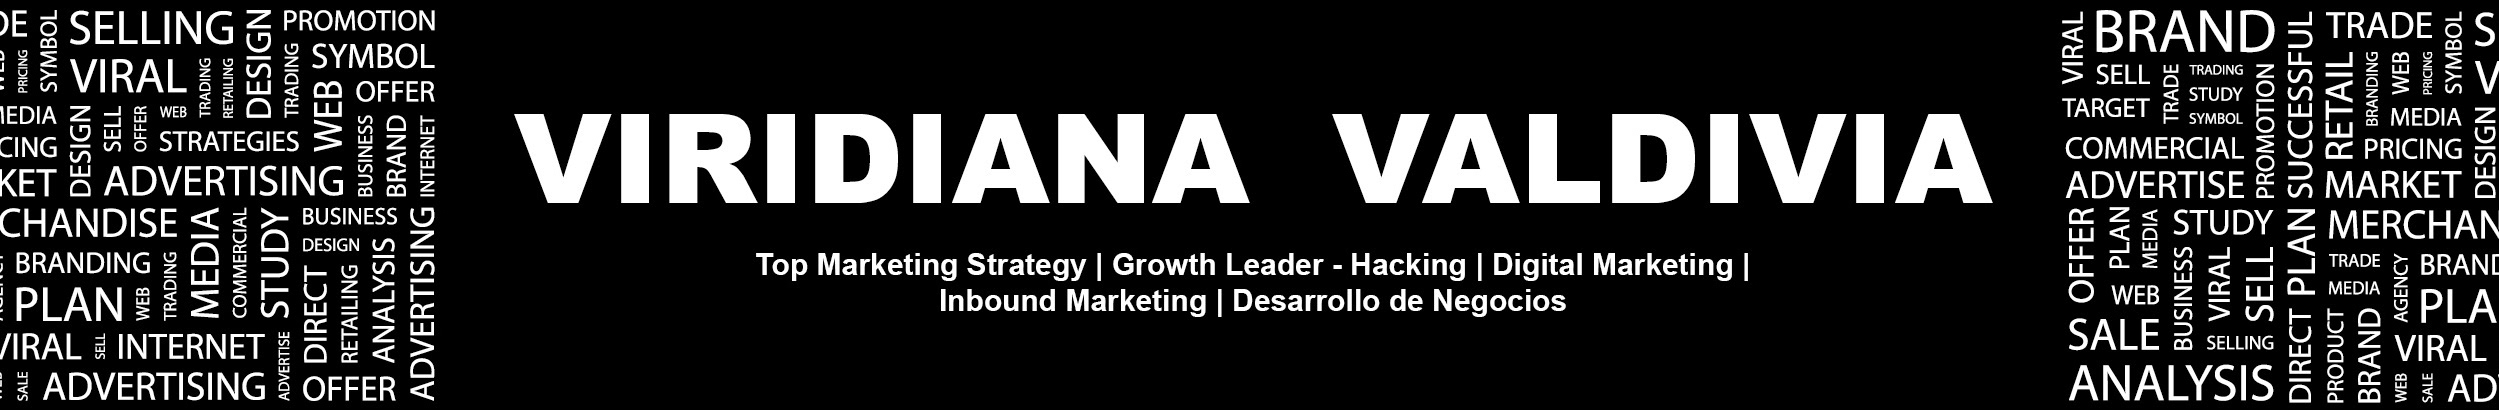 Viridiana Valdivia's profile banner